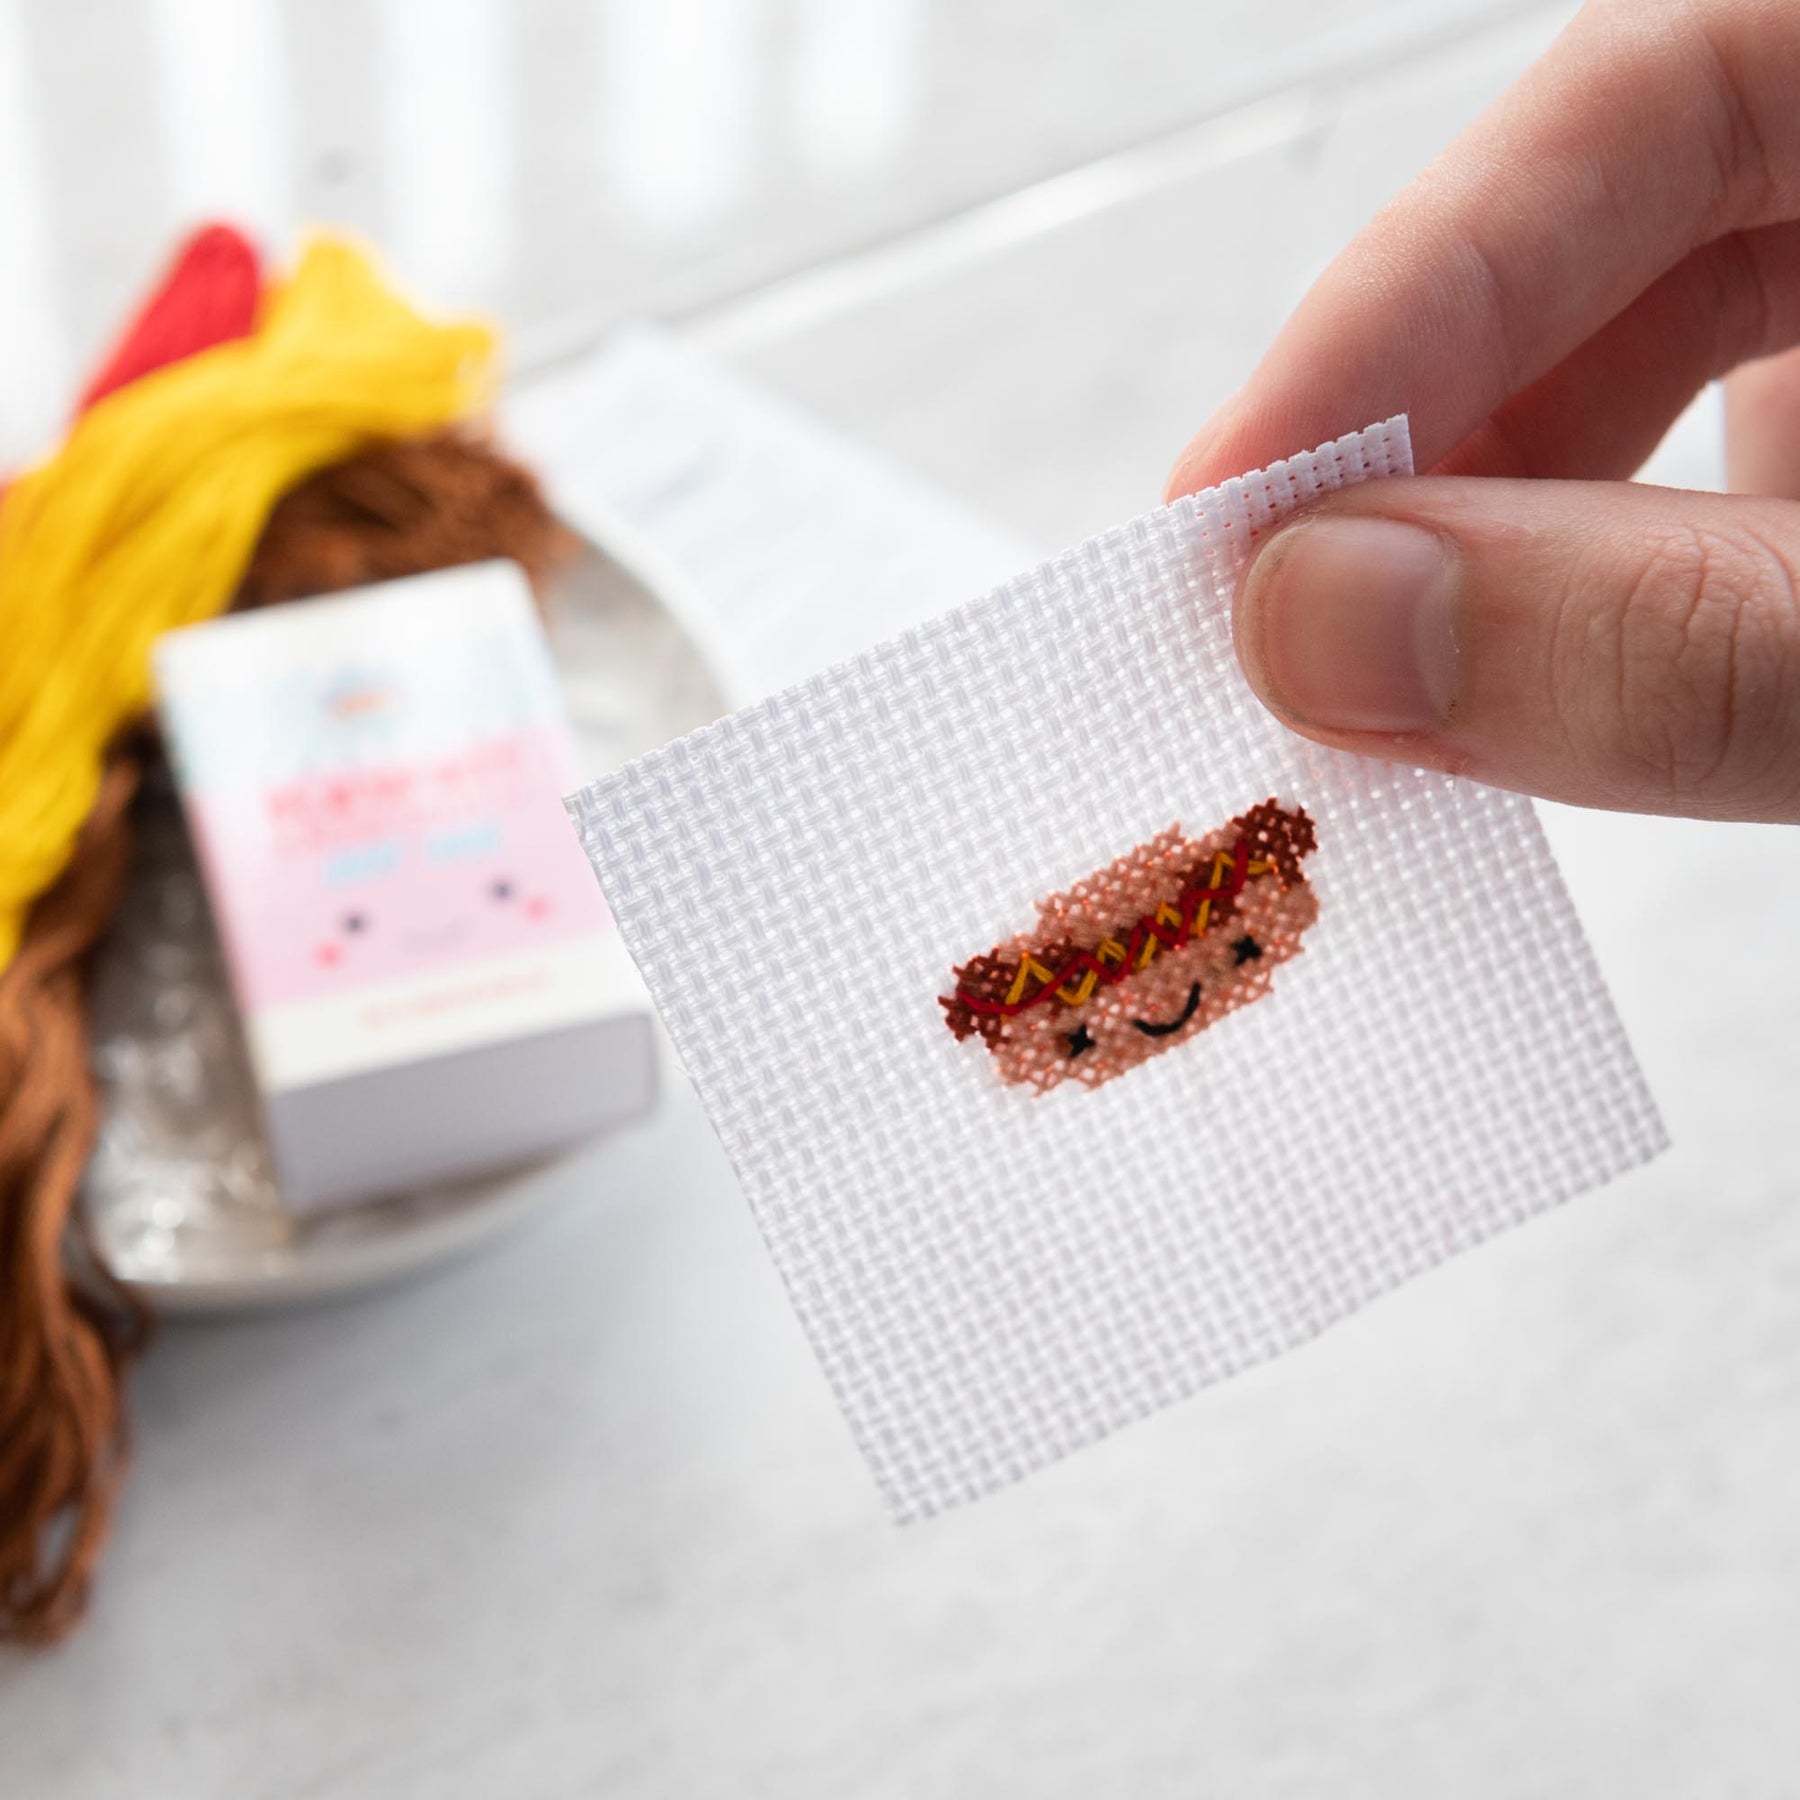 Mini Cross Stitch Kit With Kawaii Hot Dog Design